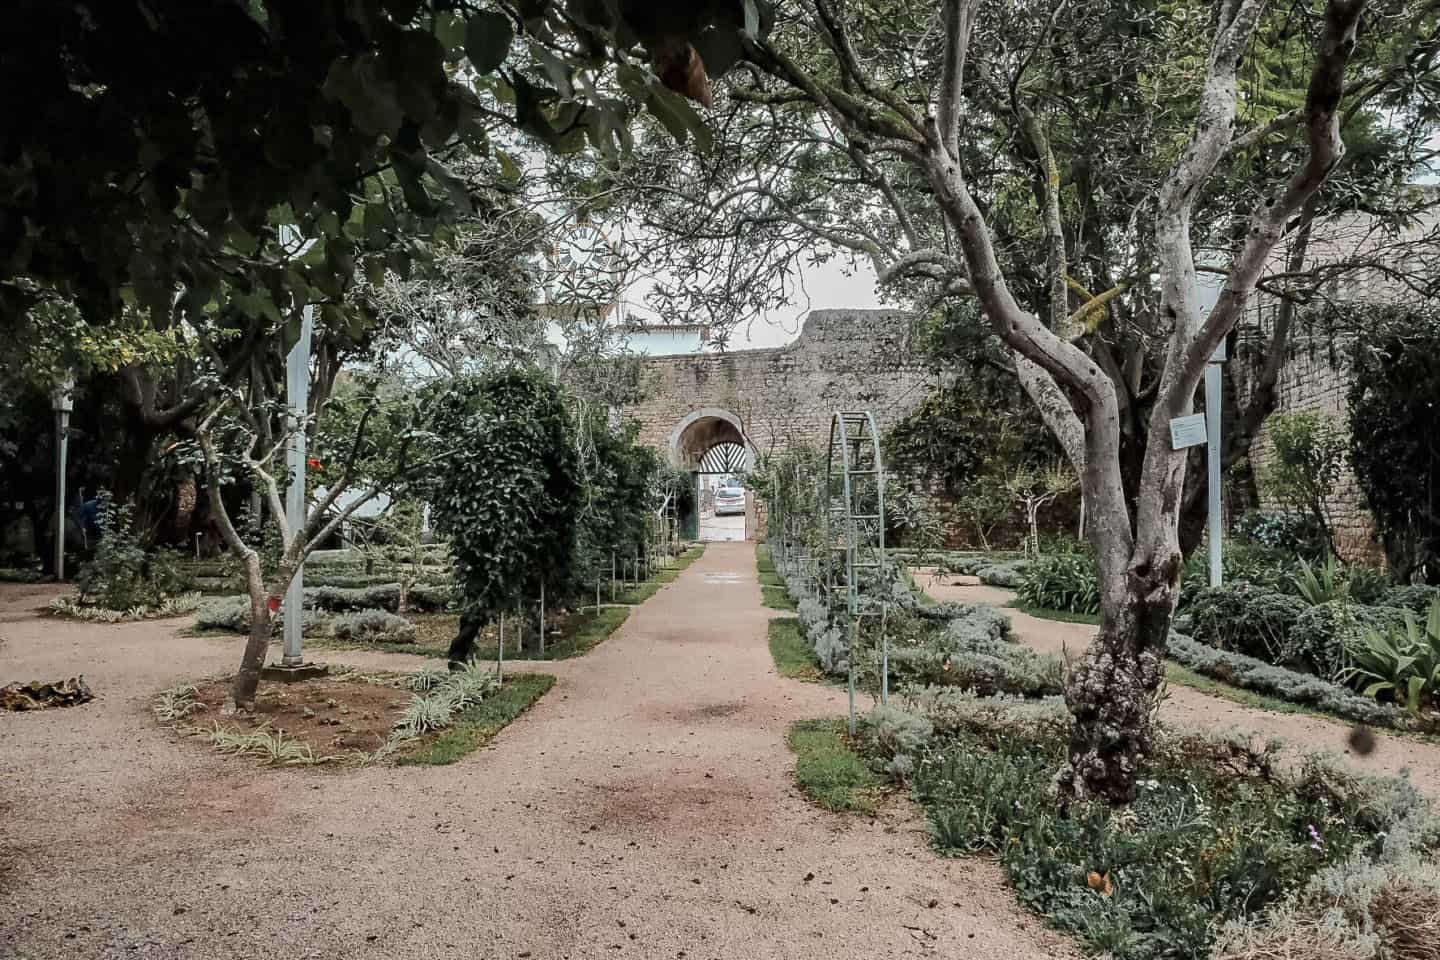 Garden walkways inside stone walls at the Castelo de Tavira.